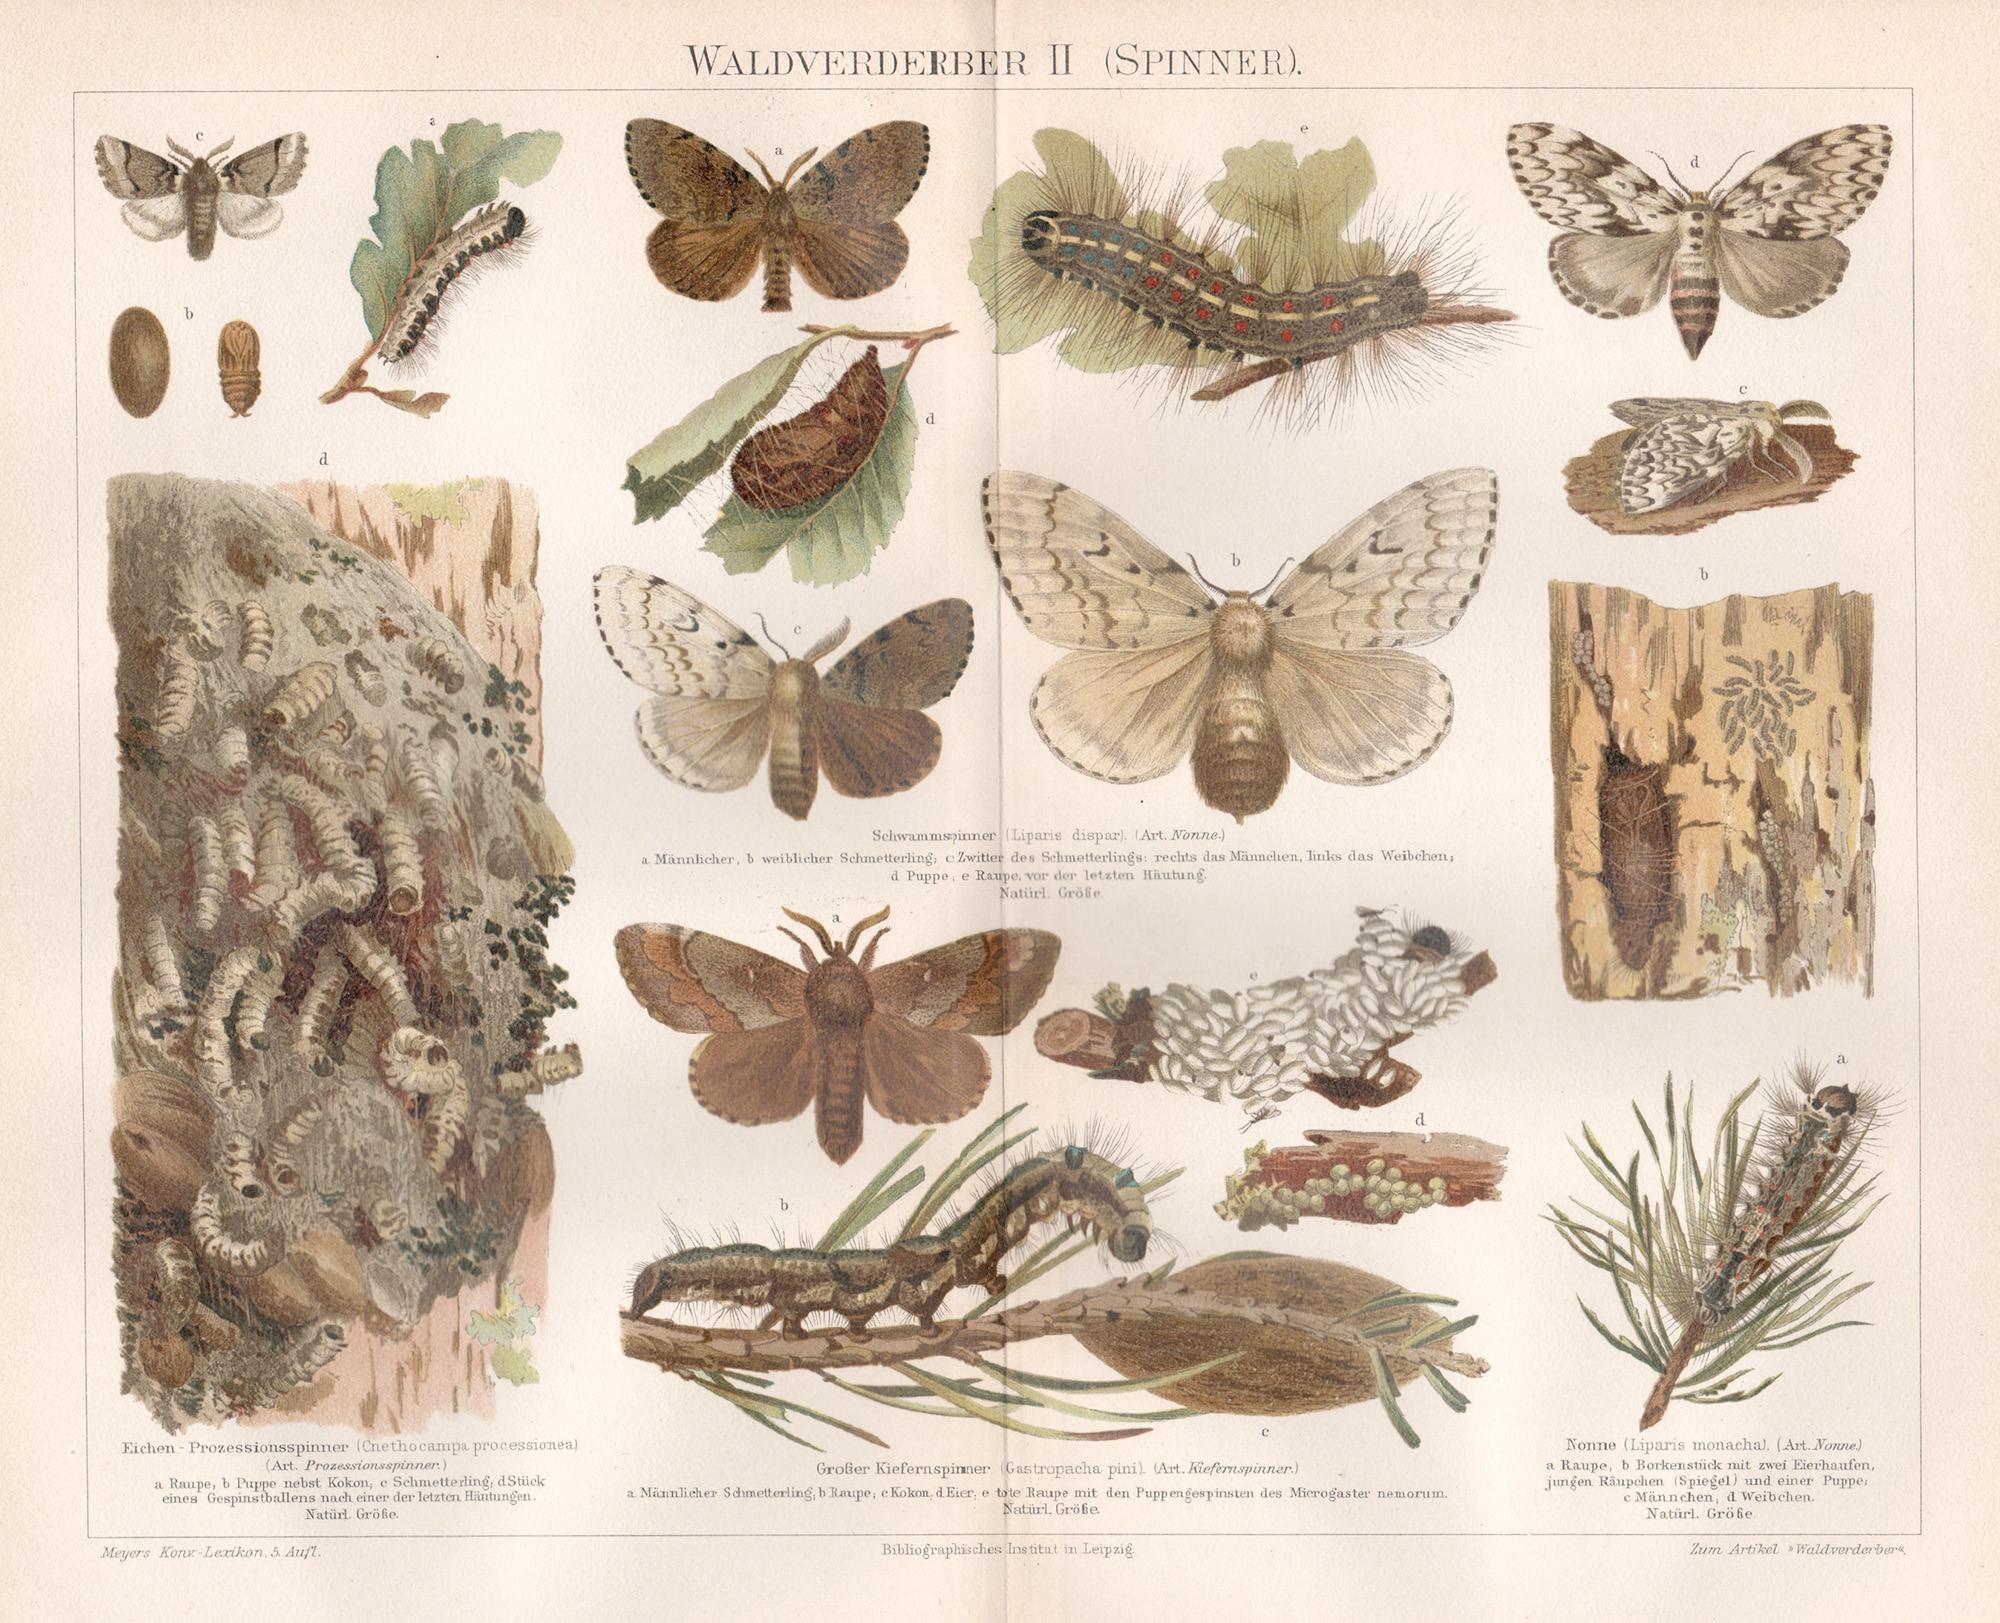 Unknown Animal Print - Waldverderber II (Spinner) I (Moths), German antique natural history print